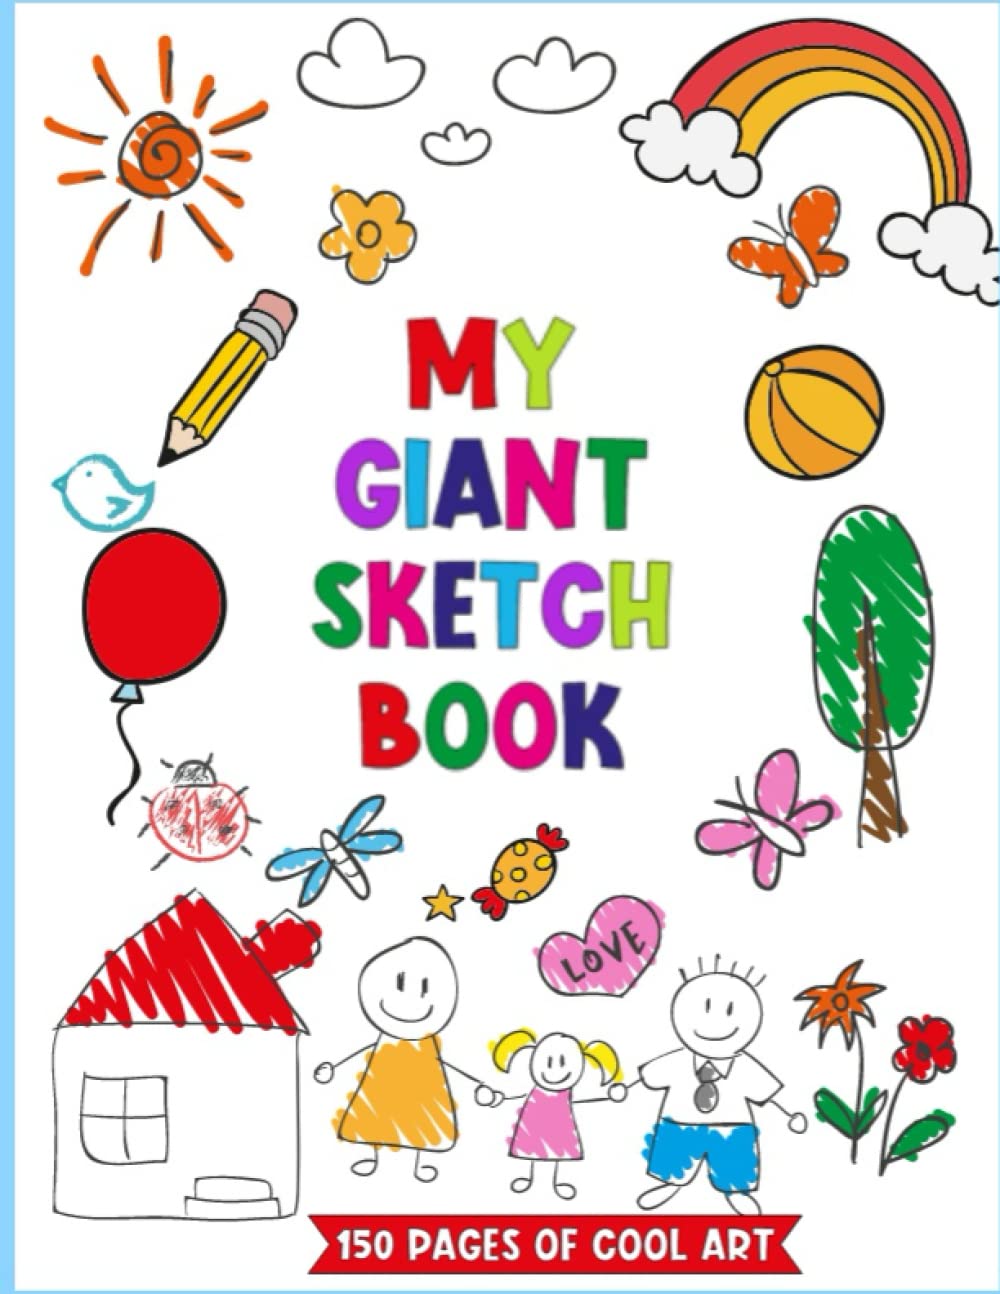 Kids Sketchbook 